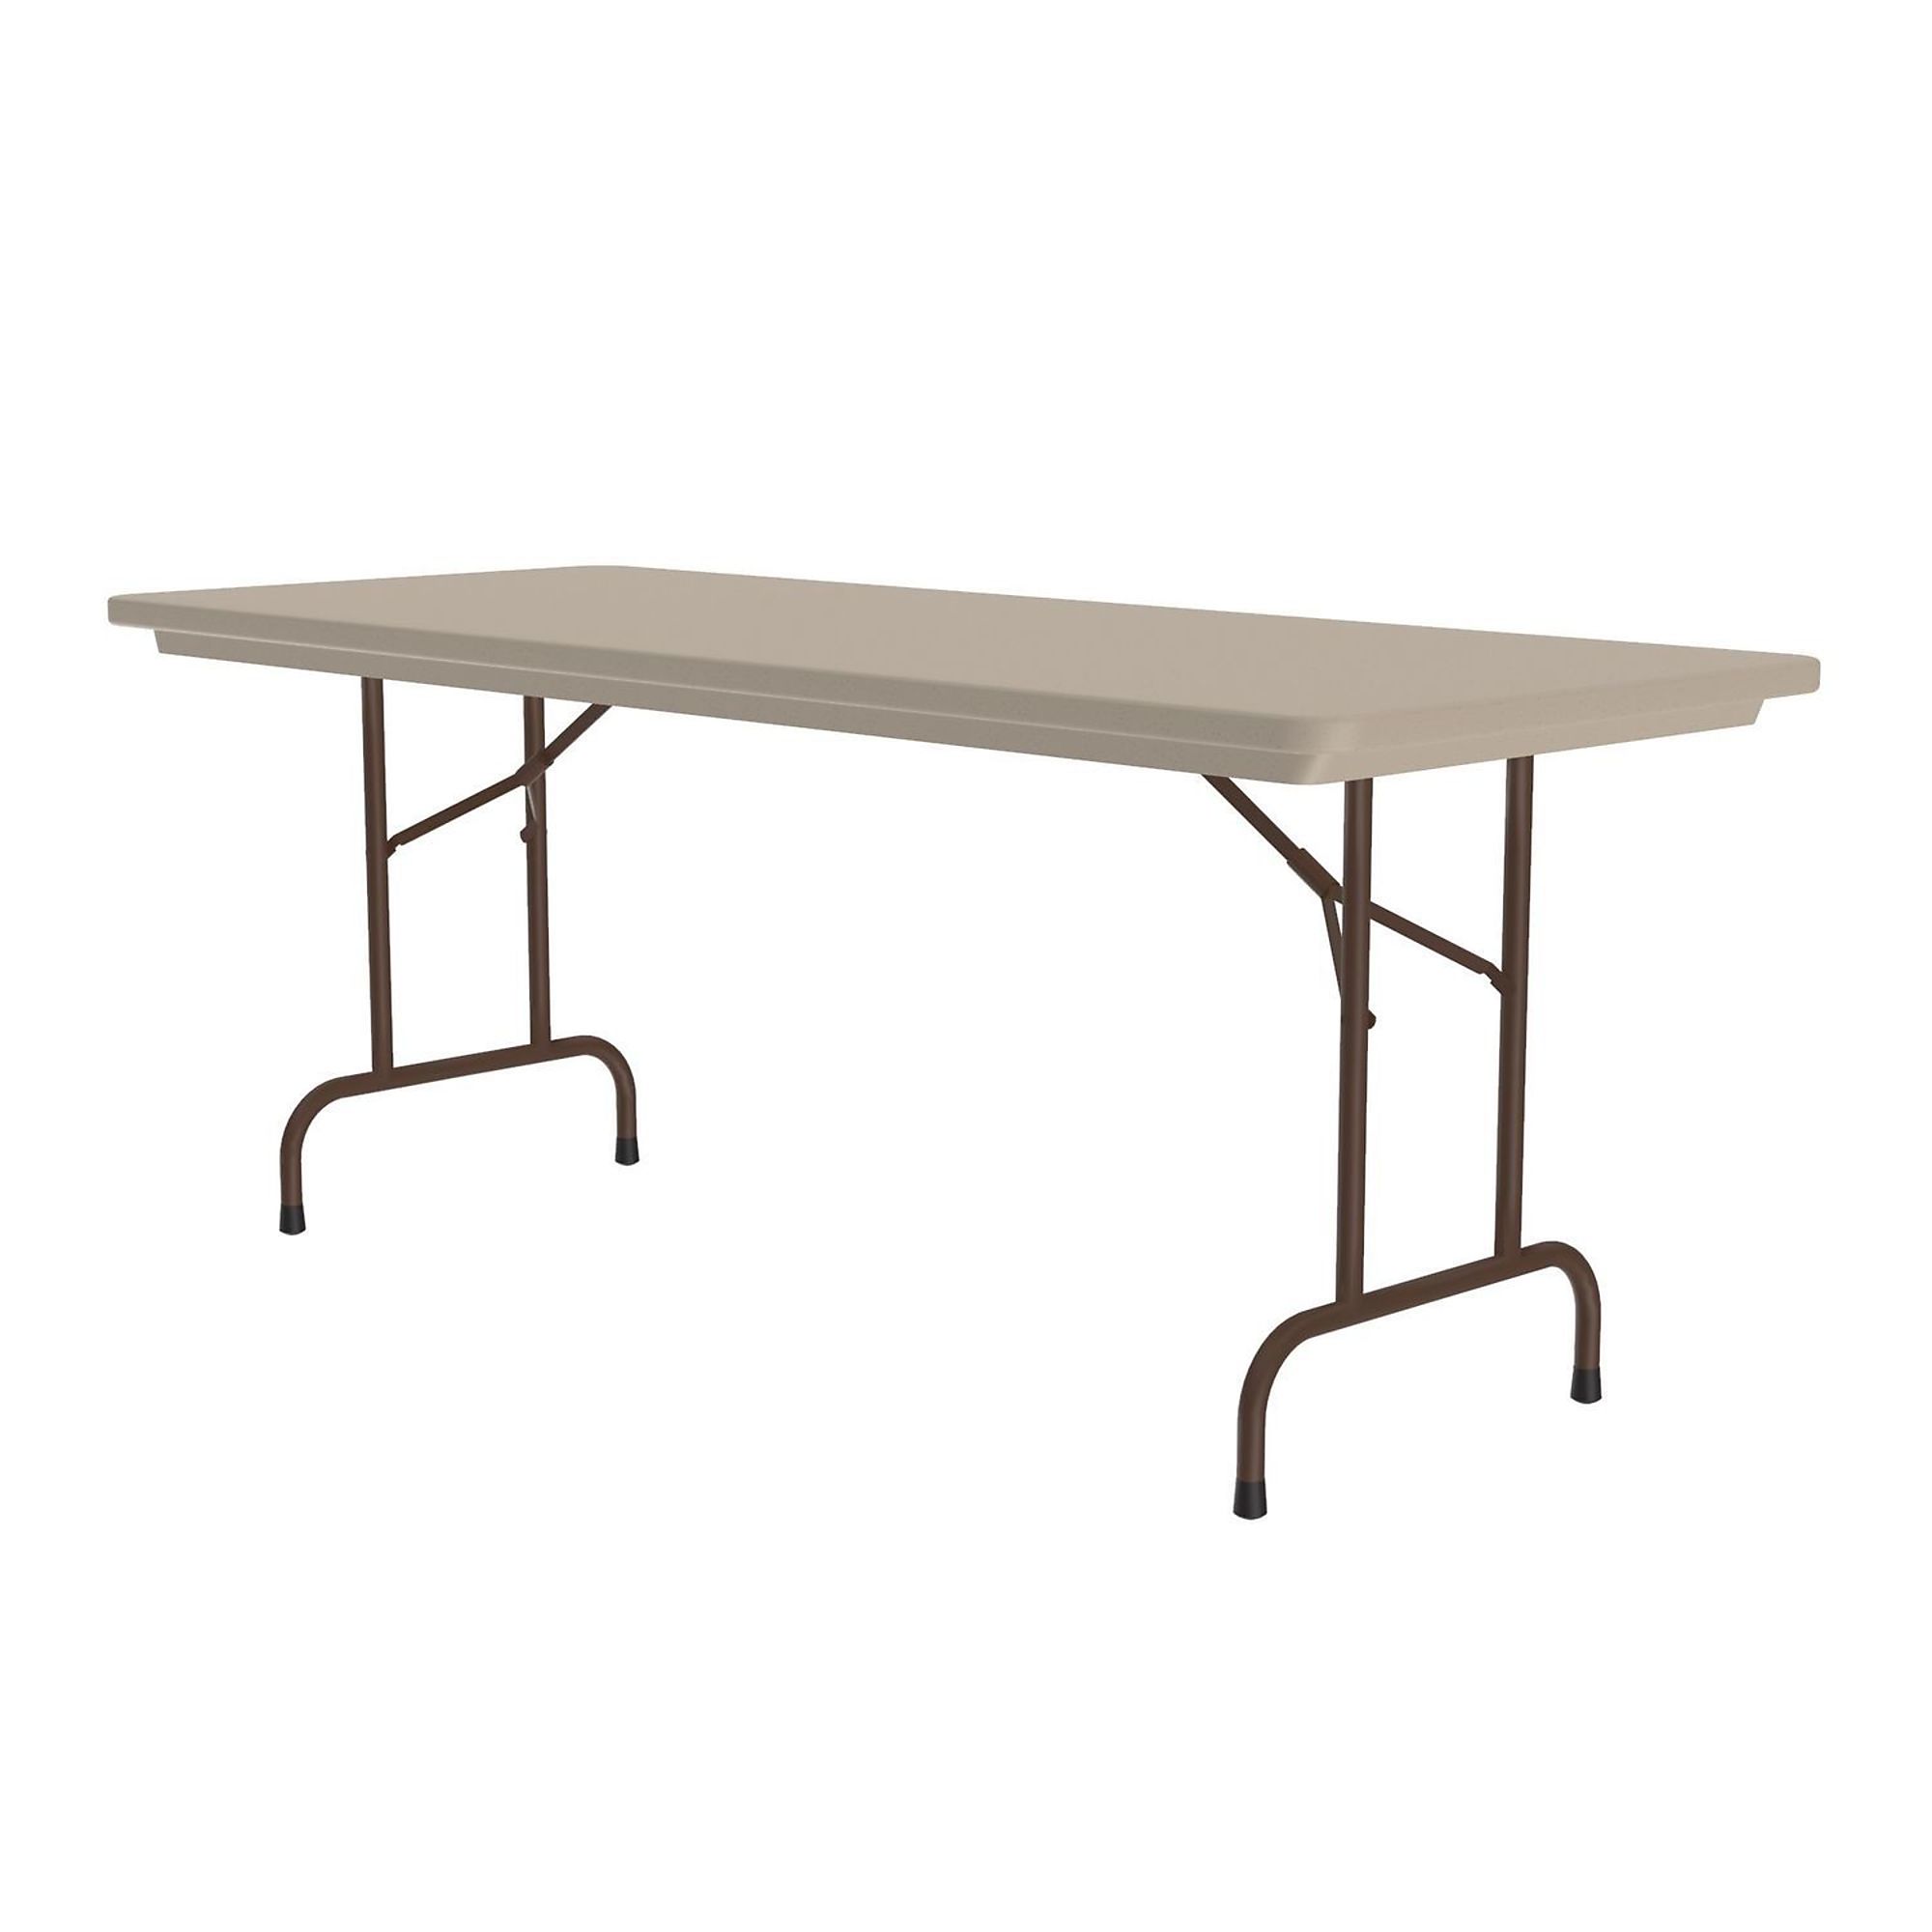 Correll, Plastic Folding Table, Mocha Granite Top, 30x72, Height 29 in, Width 30 in, Length 72 in, Model R3072-24